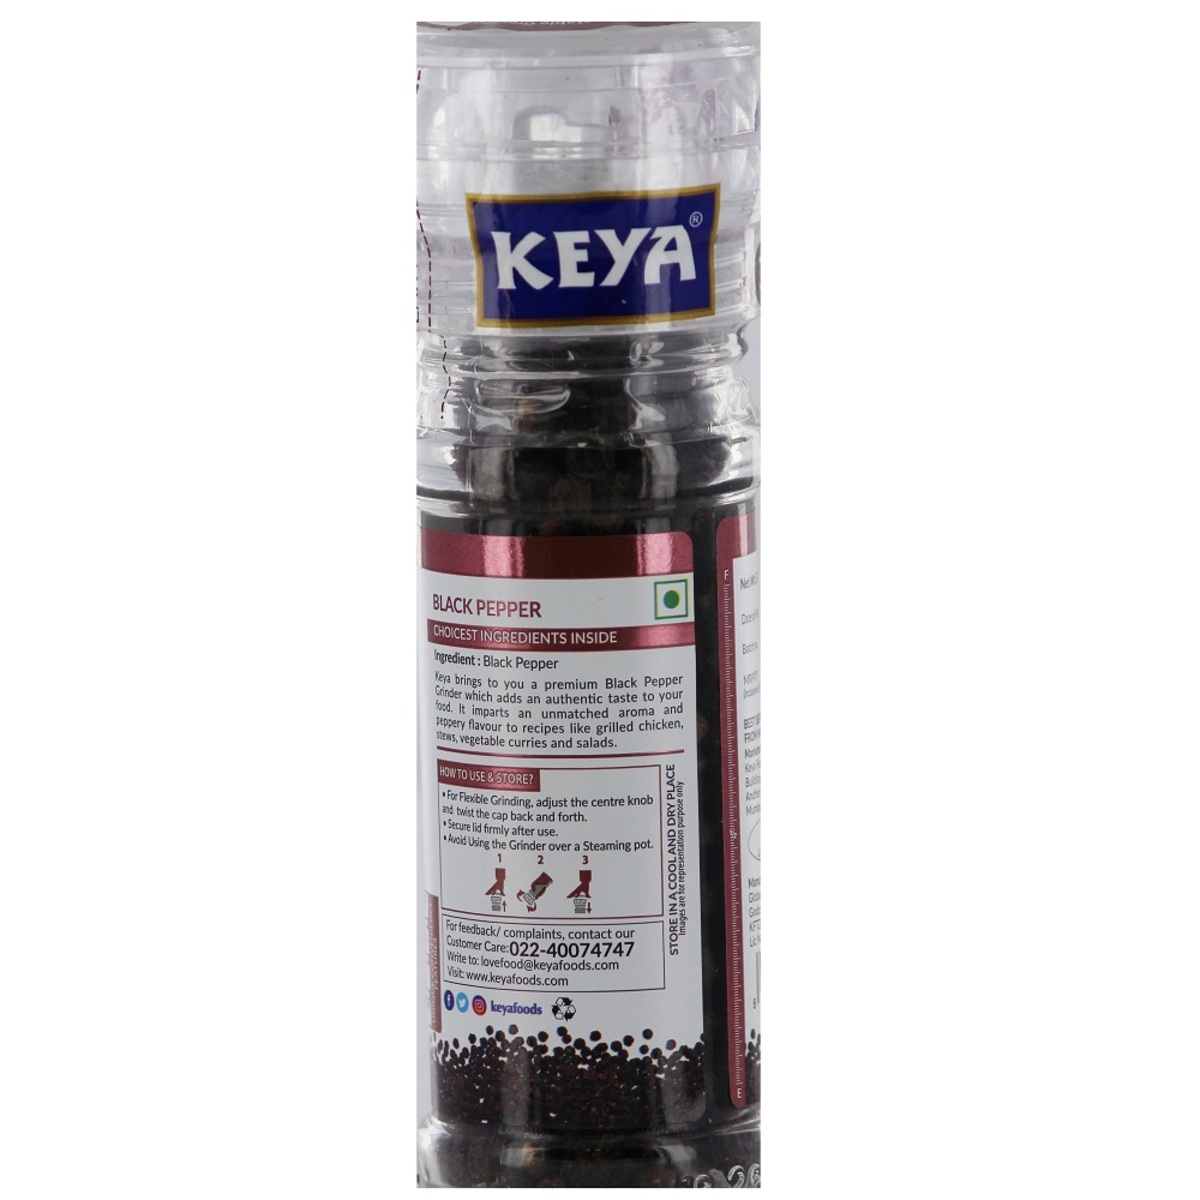 Keya Black Pepper Grinder 50g